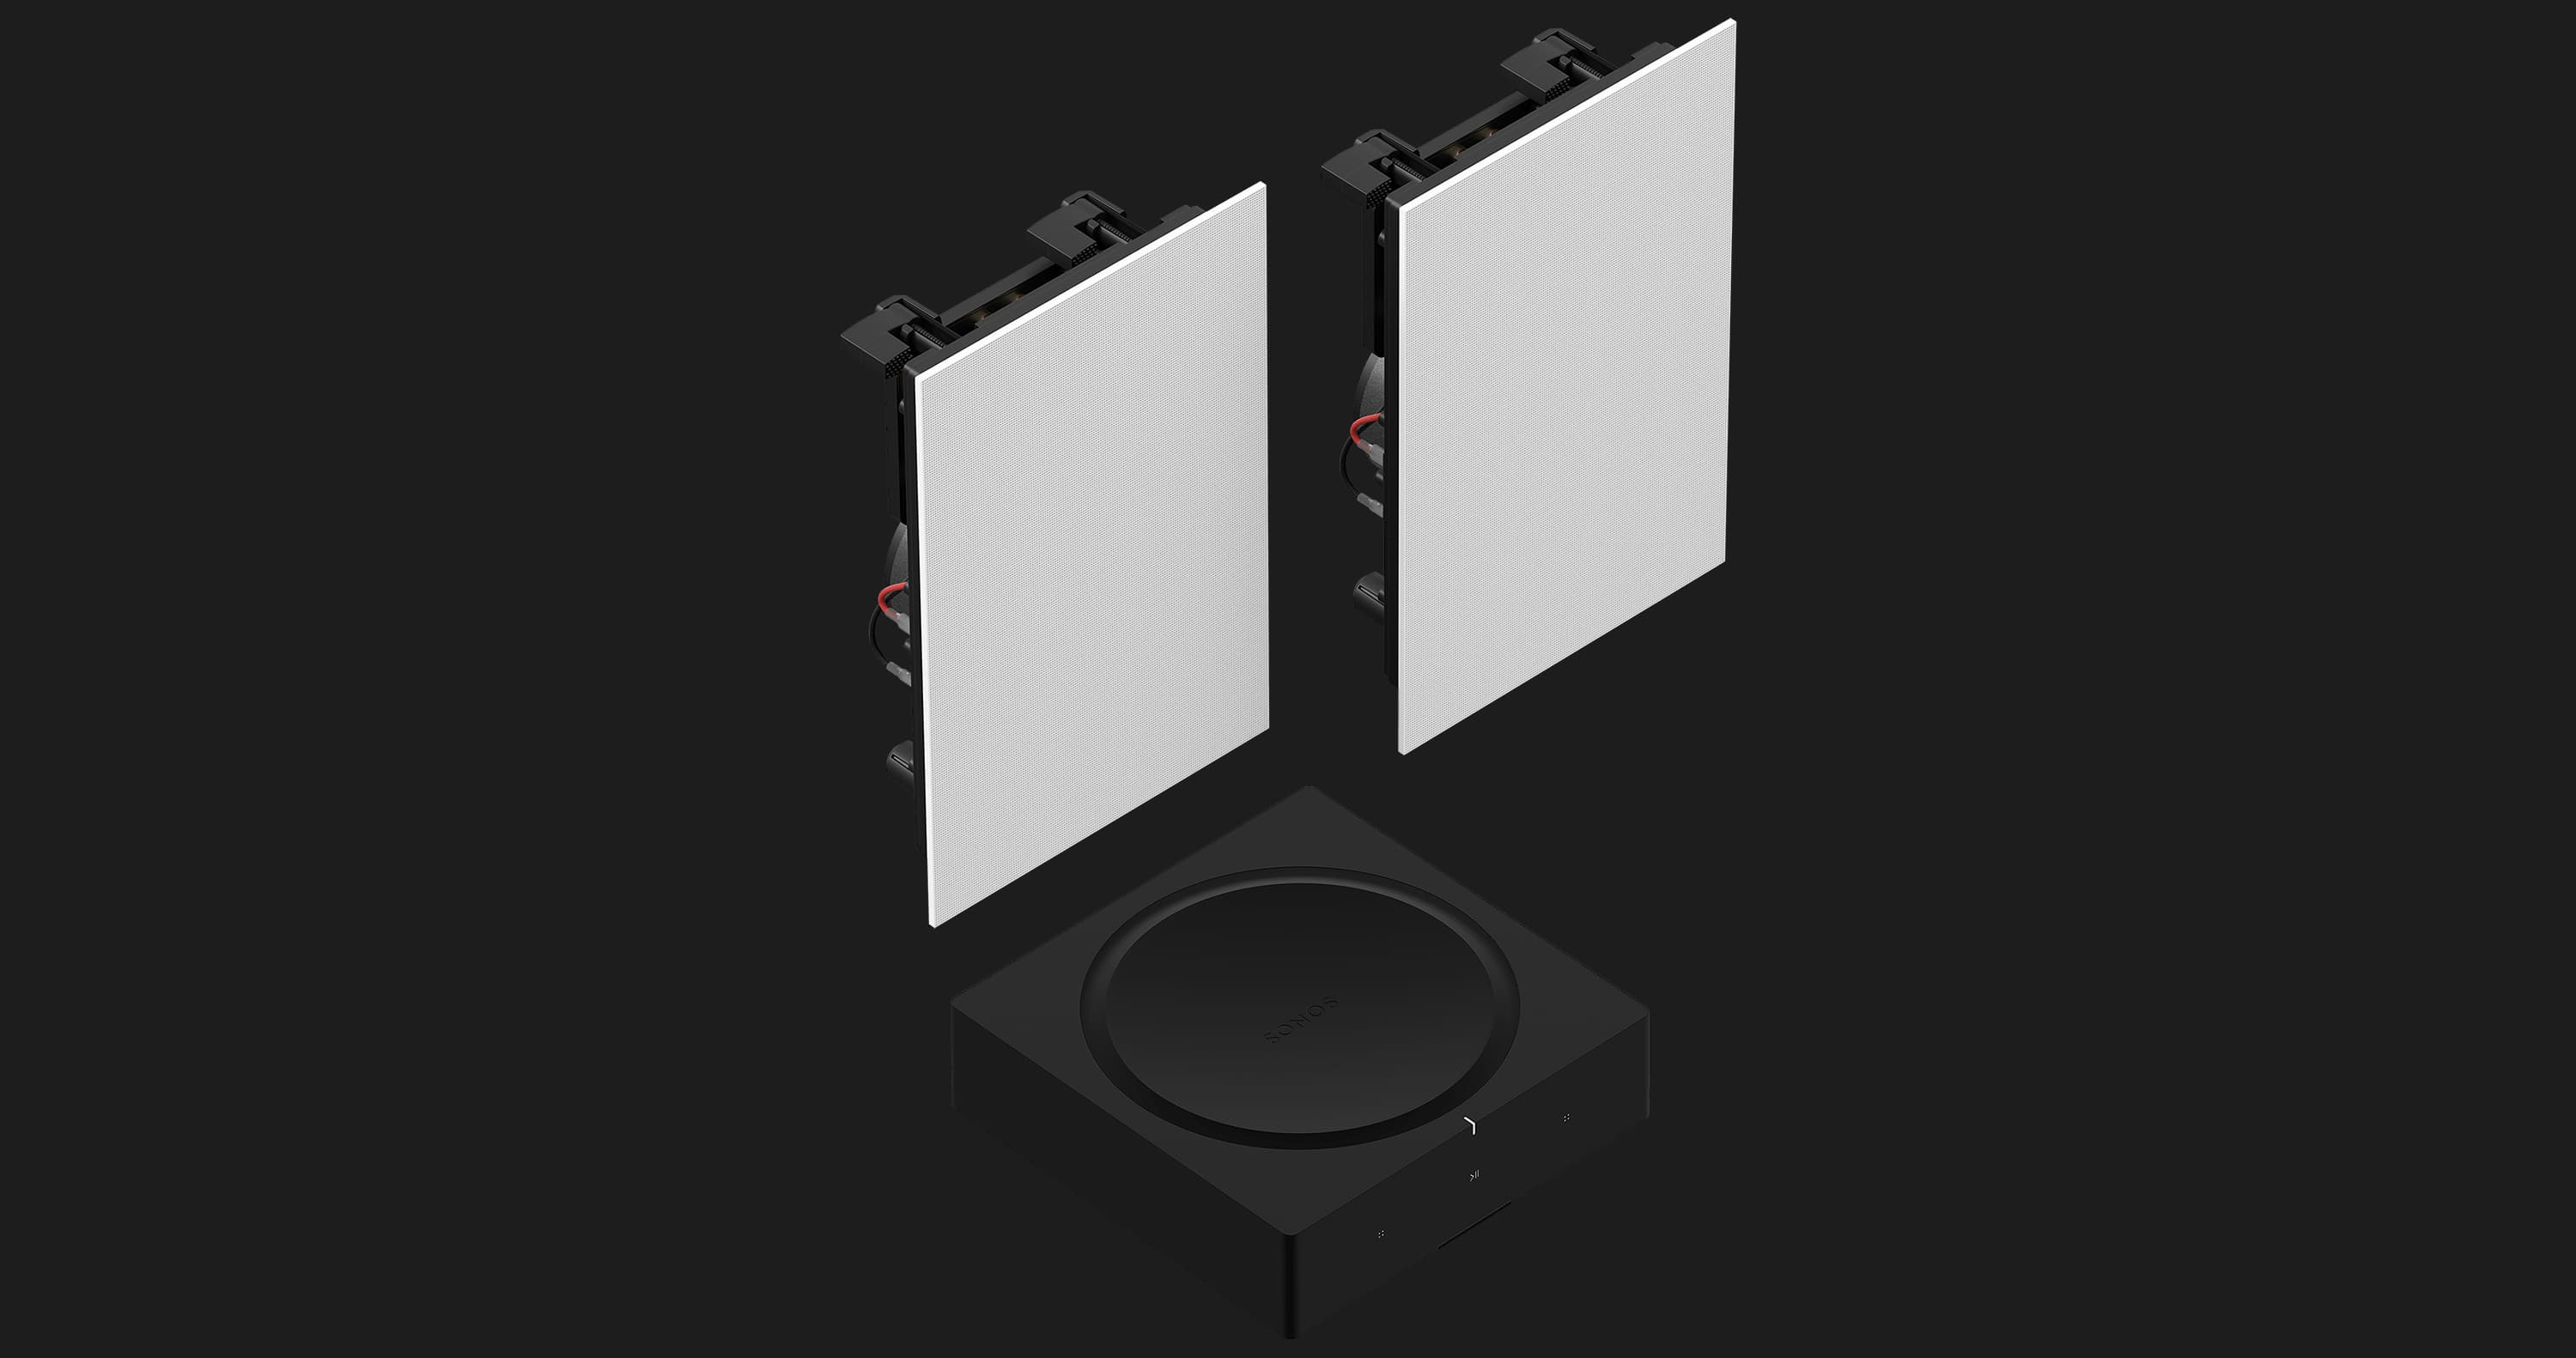 Акустическая система Sonos In-Wall Speaker